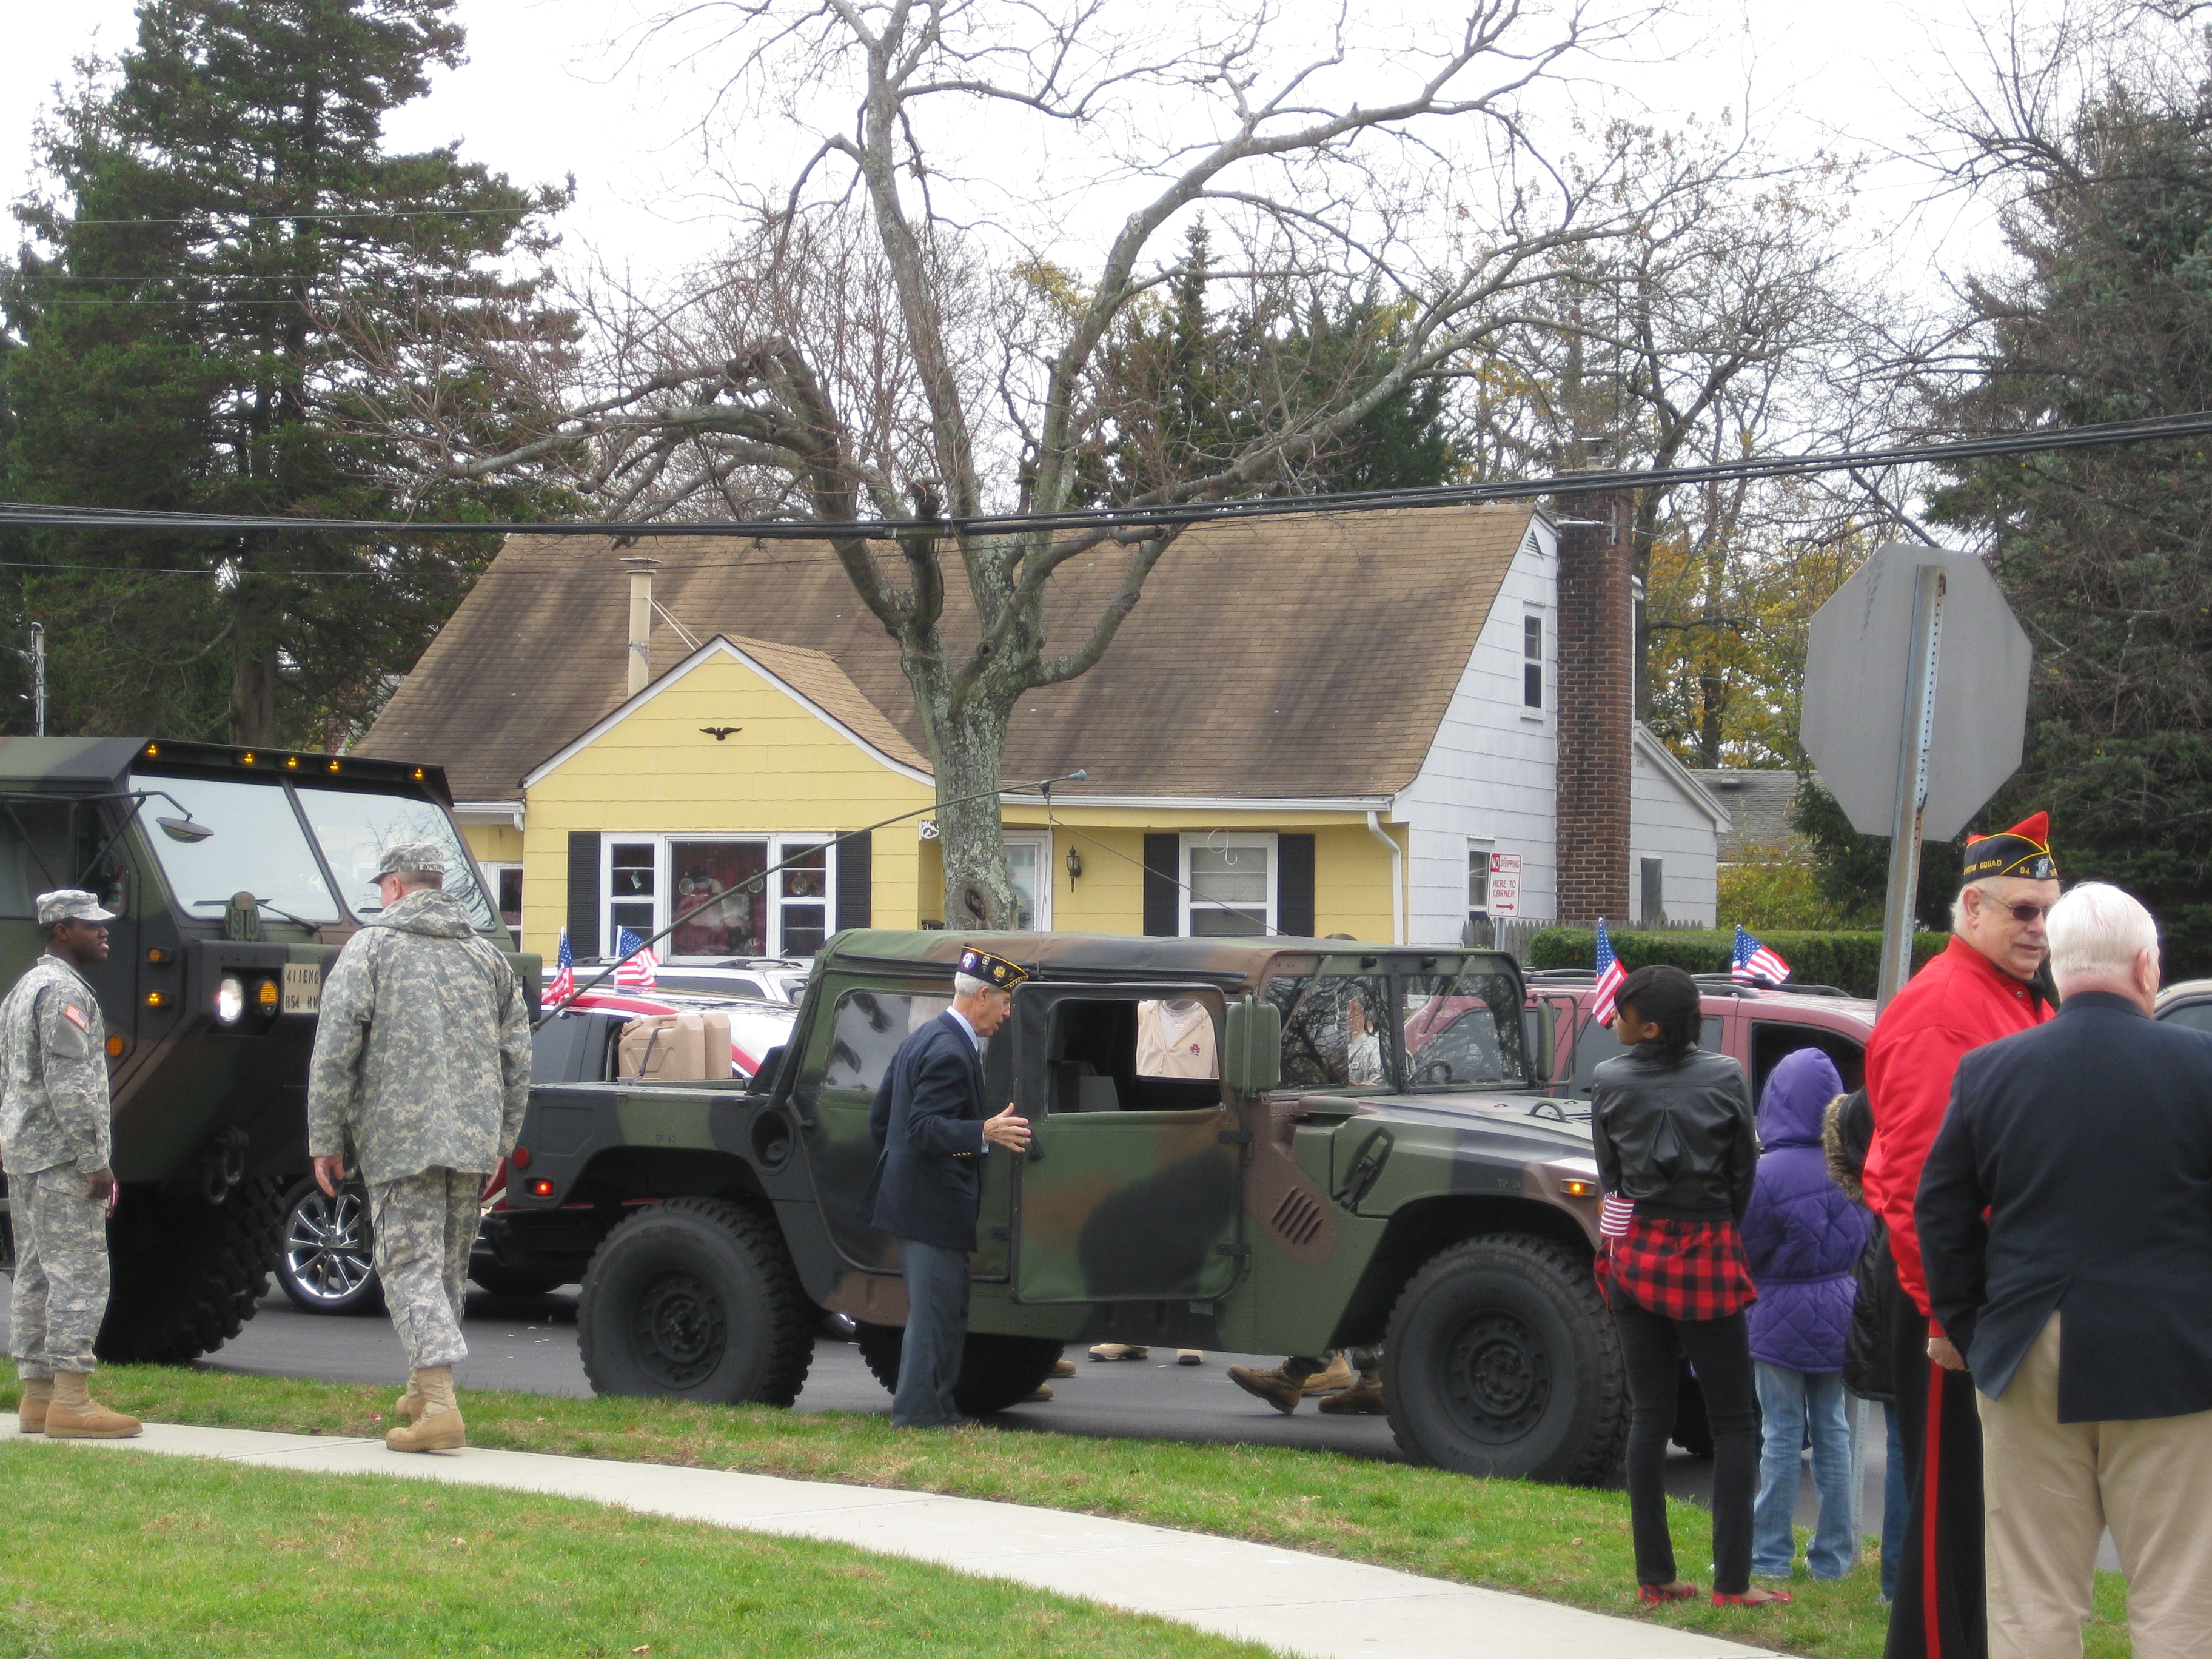 Veteran's Day: Glorifying war with military vehicles